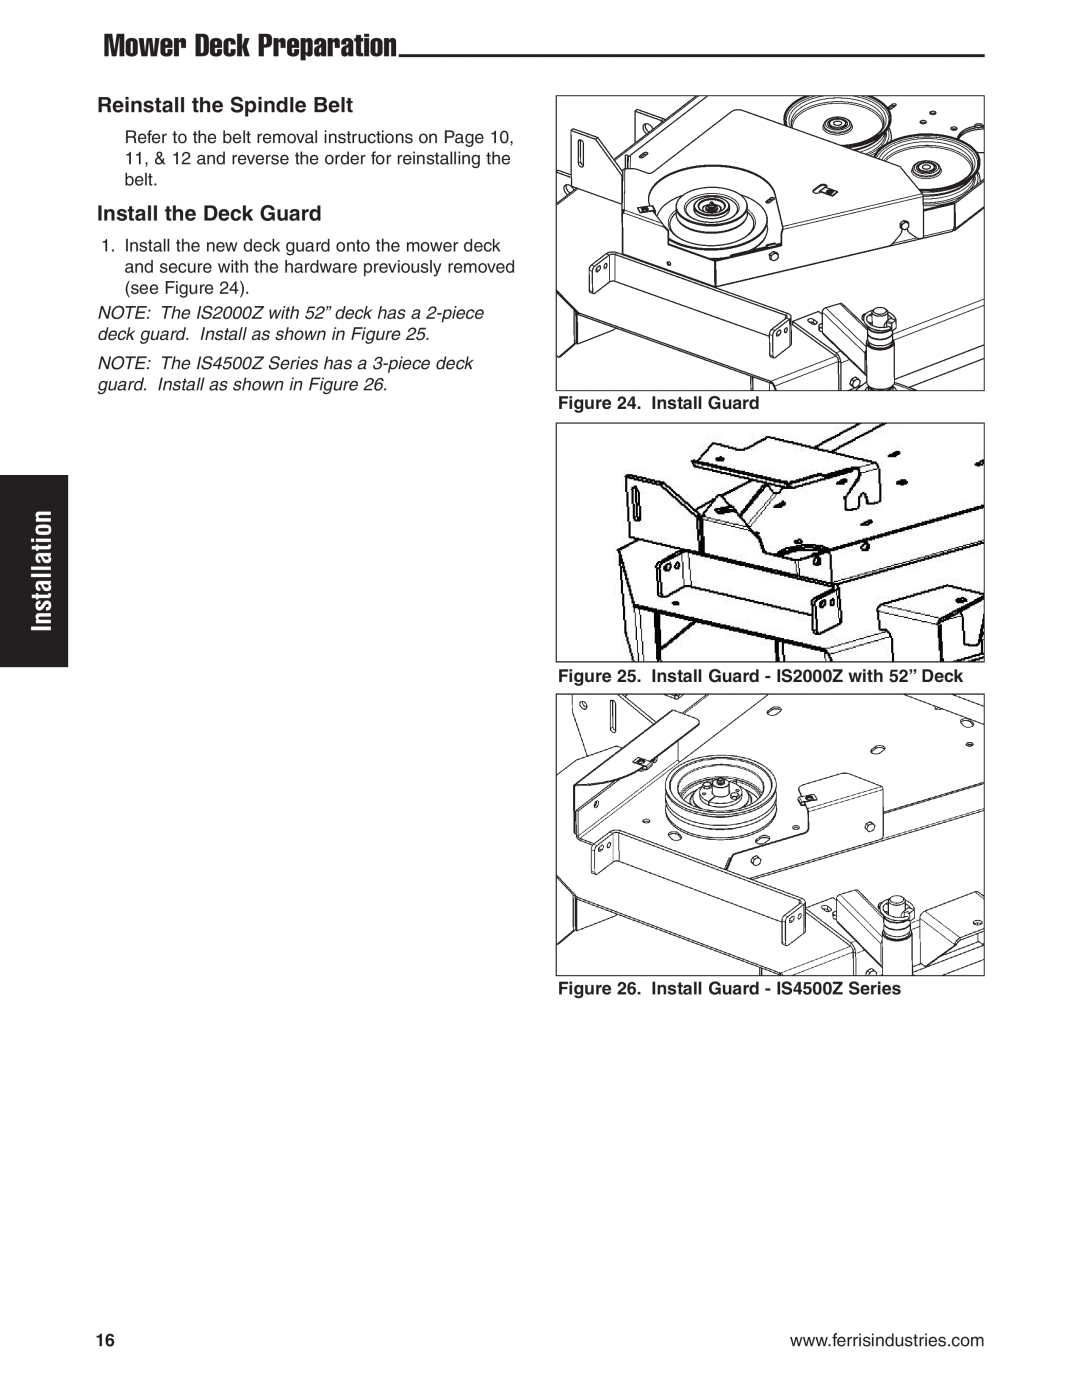 Snapper IS2000Zc Mower Deck Preparation, Installation, Reinstall the Spindle Belt, Install the Deck Guard, Install Guard 